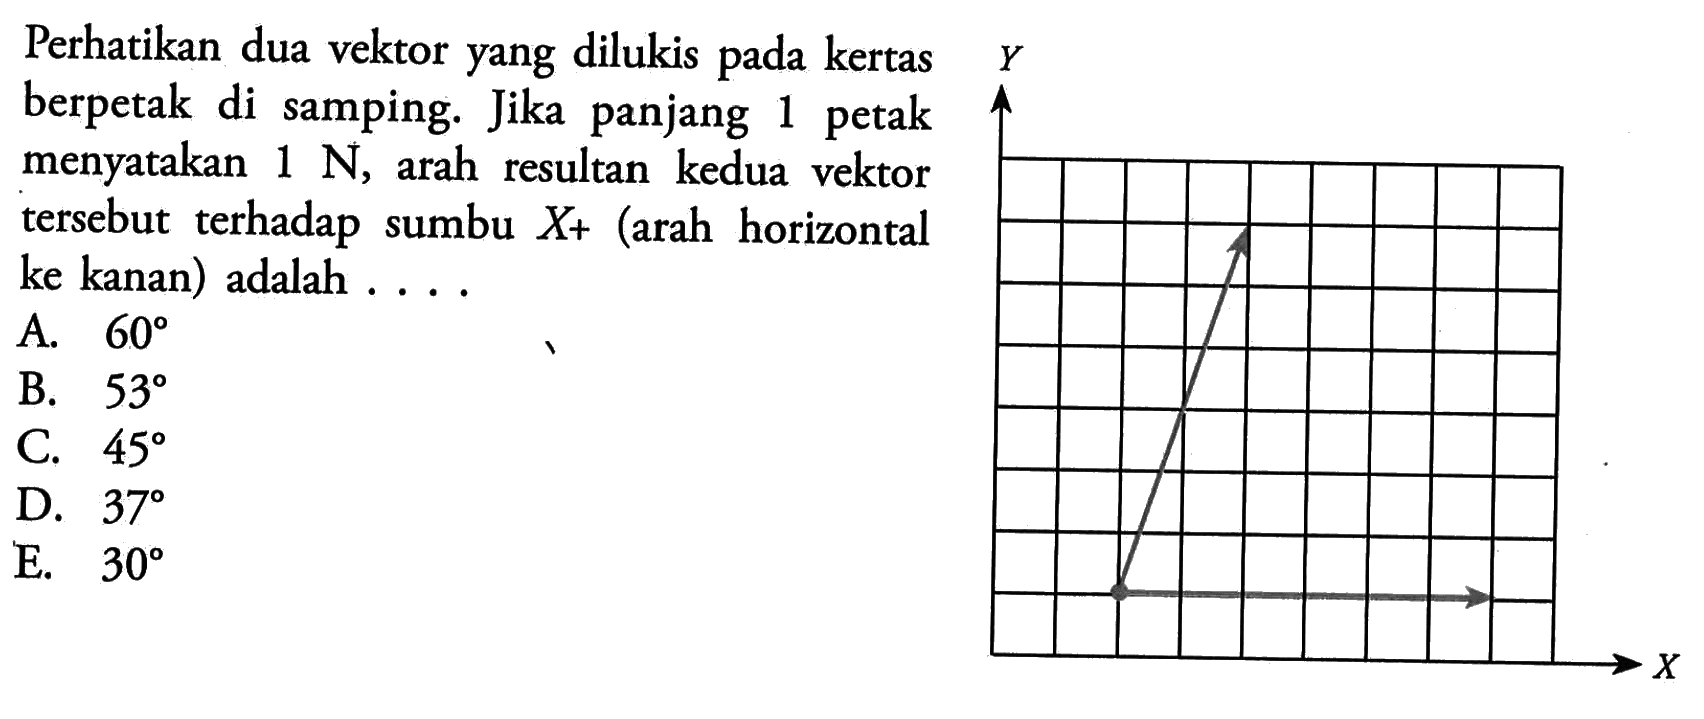 Perhatikan dua vektor yang dilukis pada kertas berpetak di samping. Jika panjang 1 petak menyatakan 1 N, arah resultan kedua vektor tersebut terhadap sumbu X+ (arah horizontal ke kanan) adalah .... 
